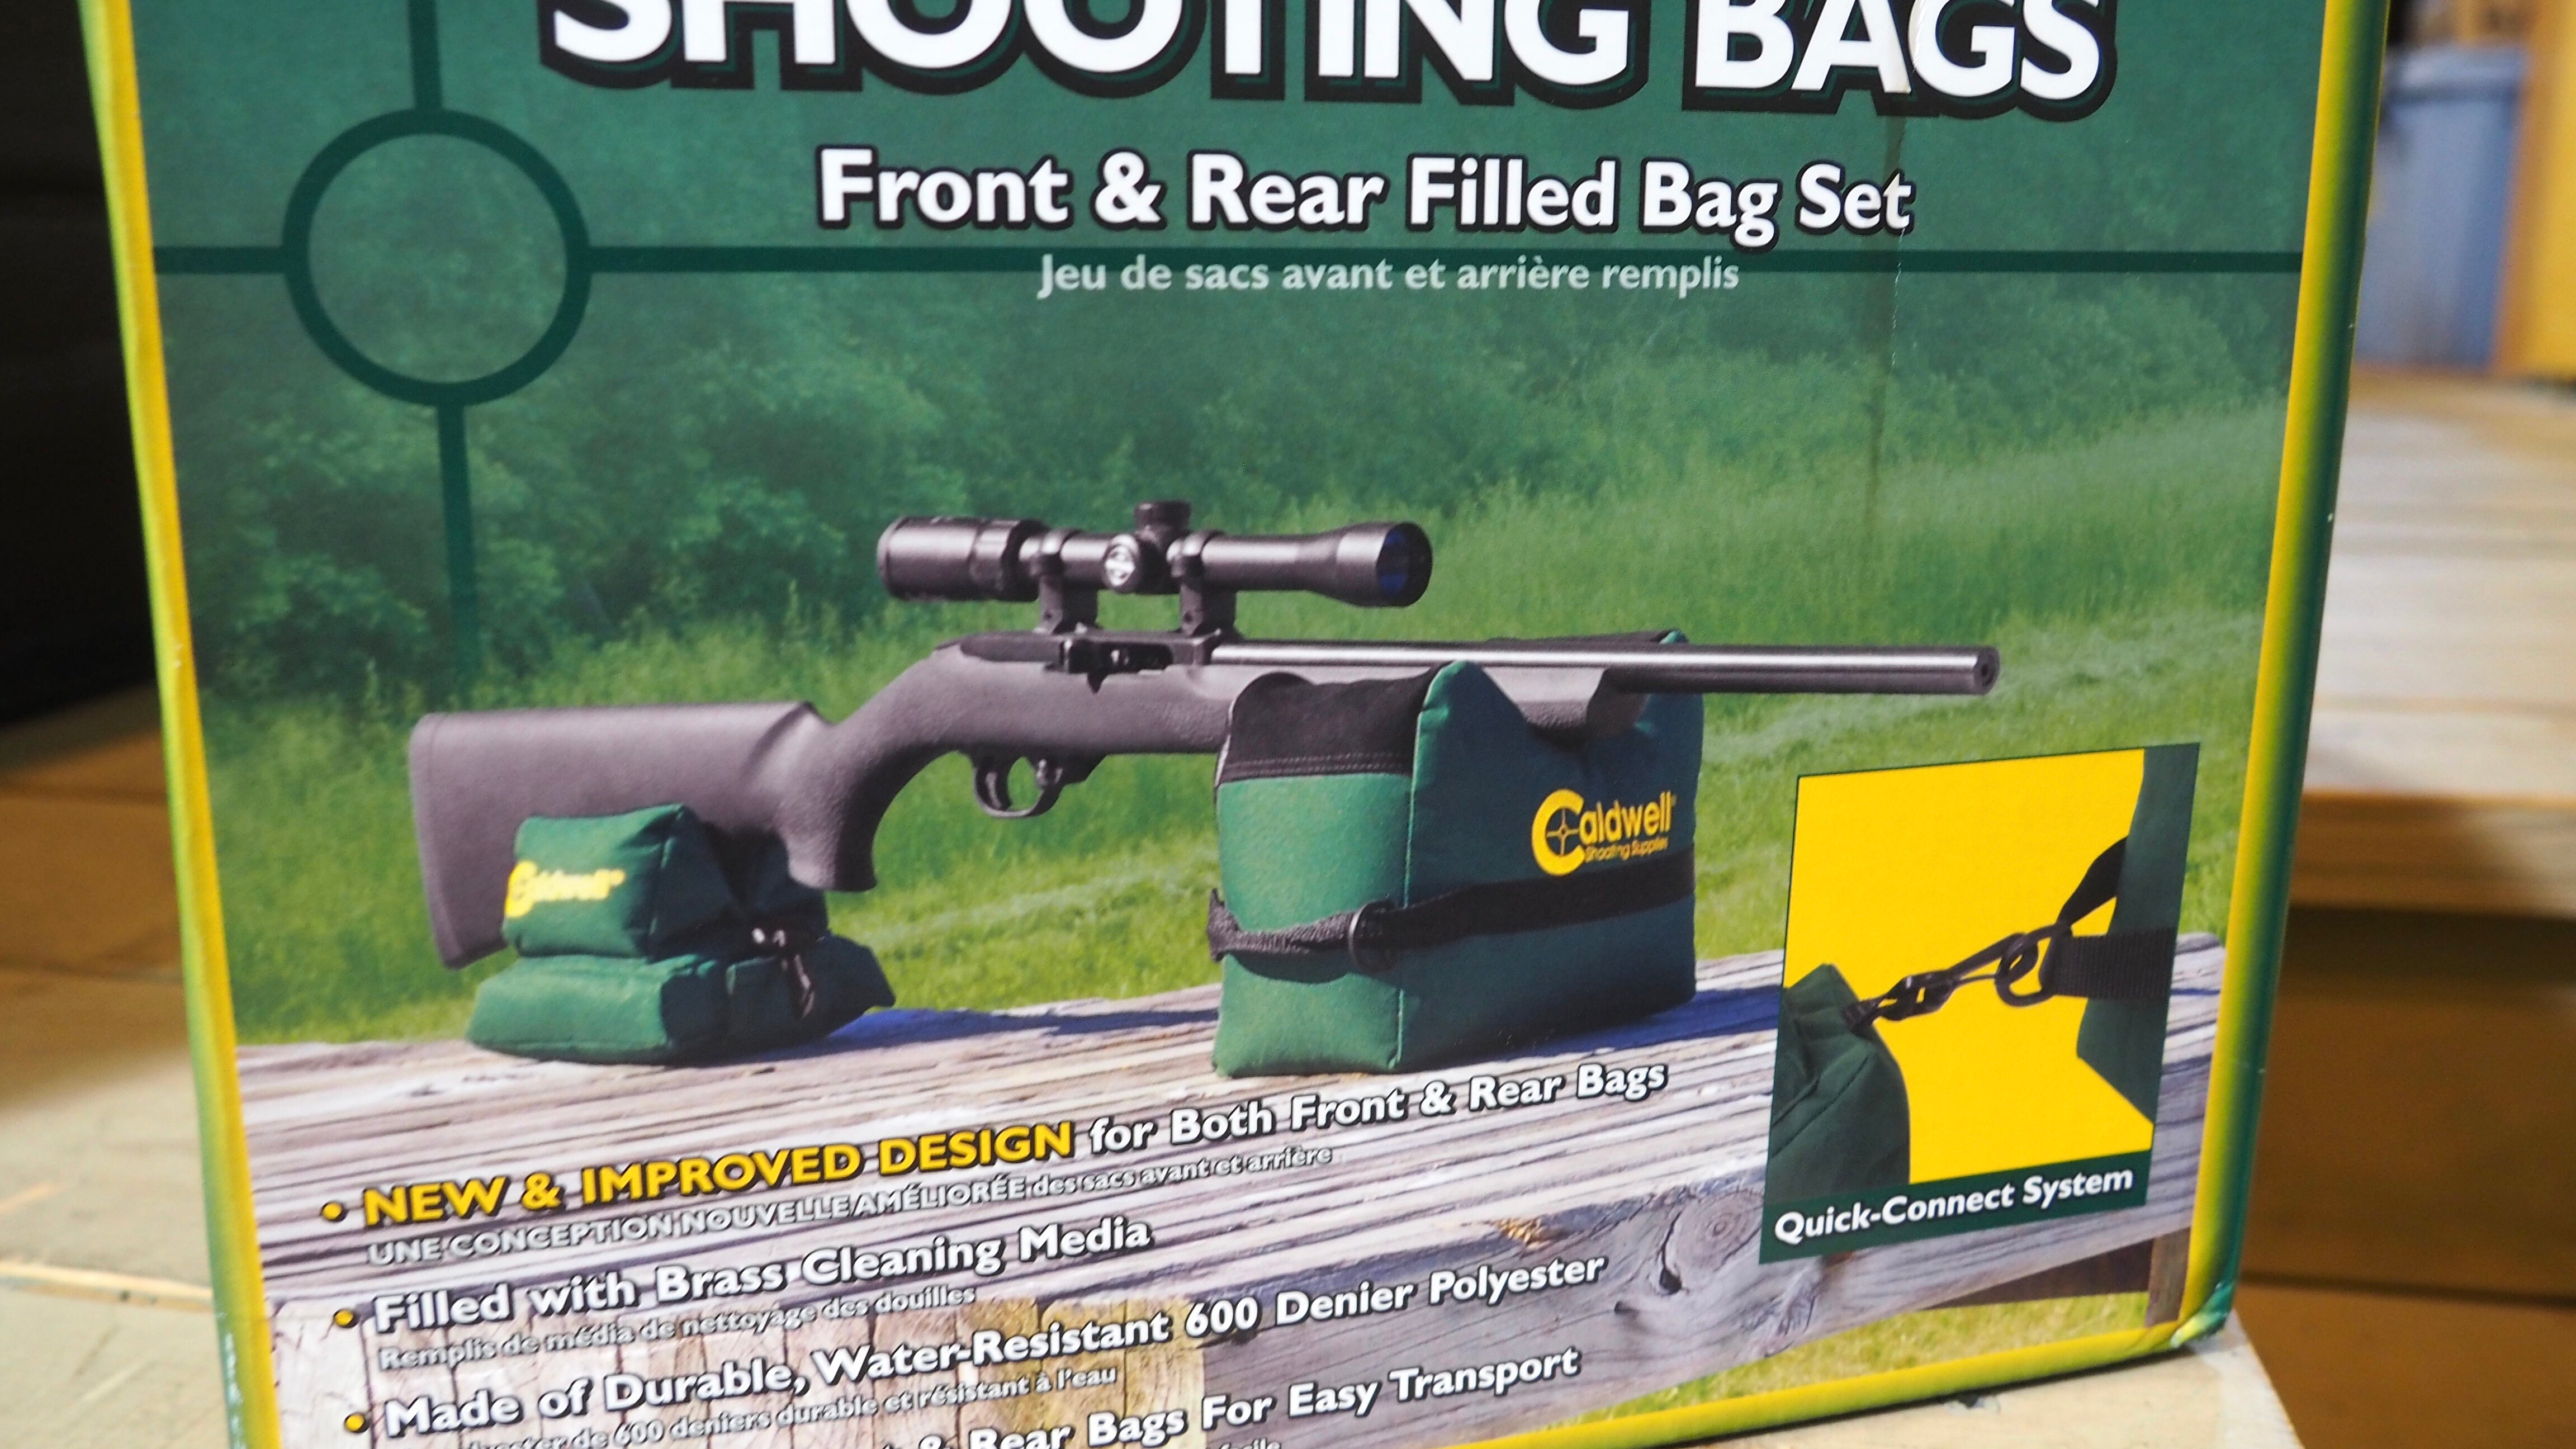 Deadshot Shooting Bags